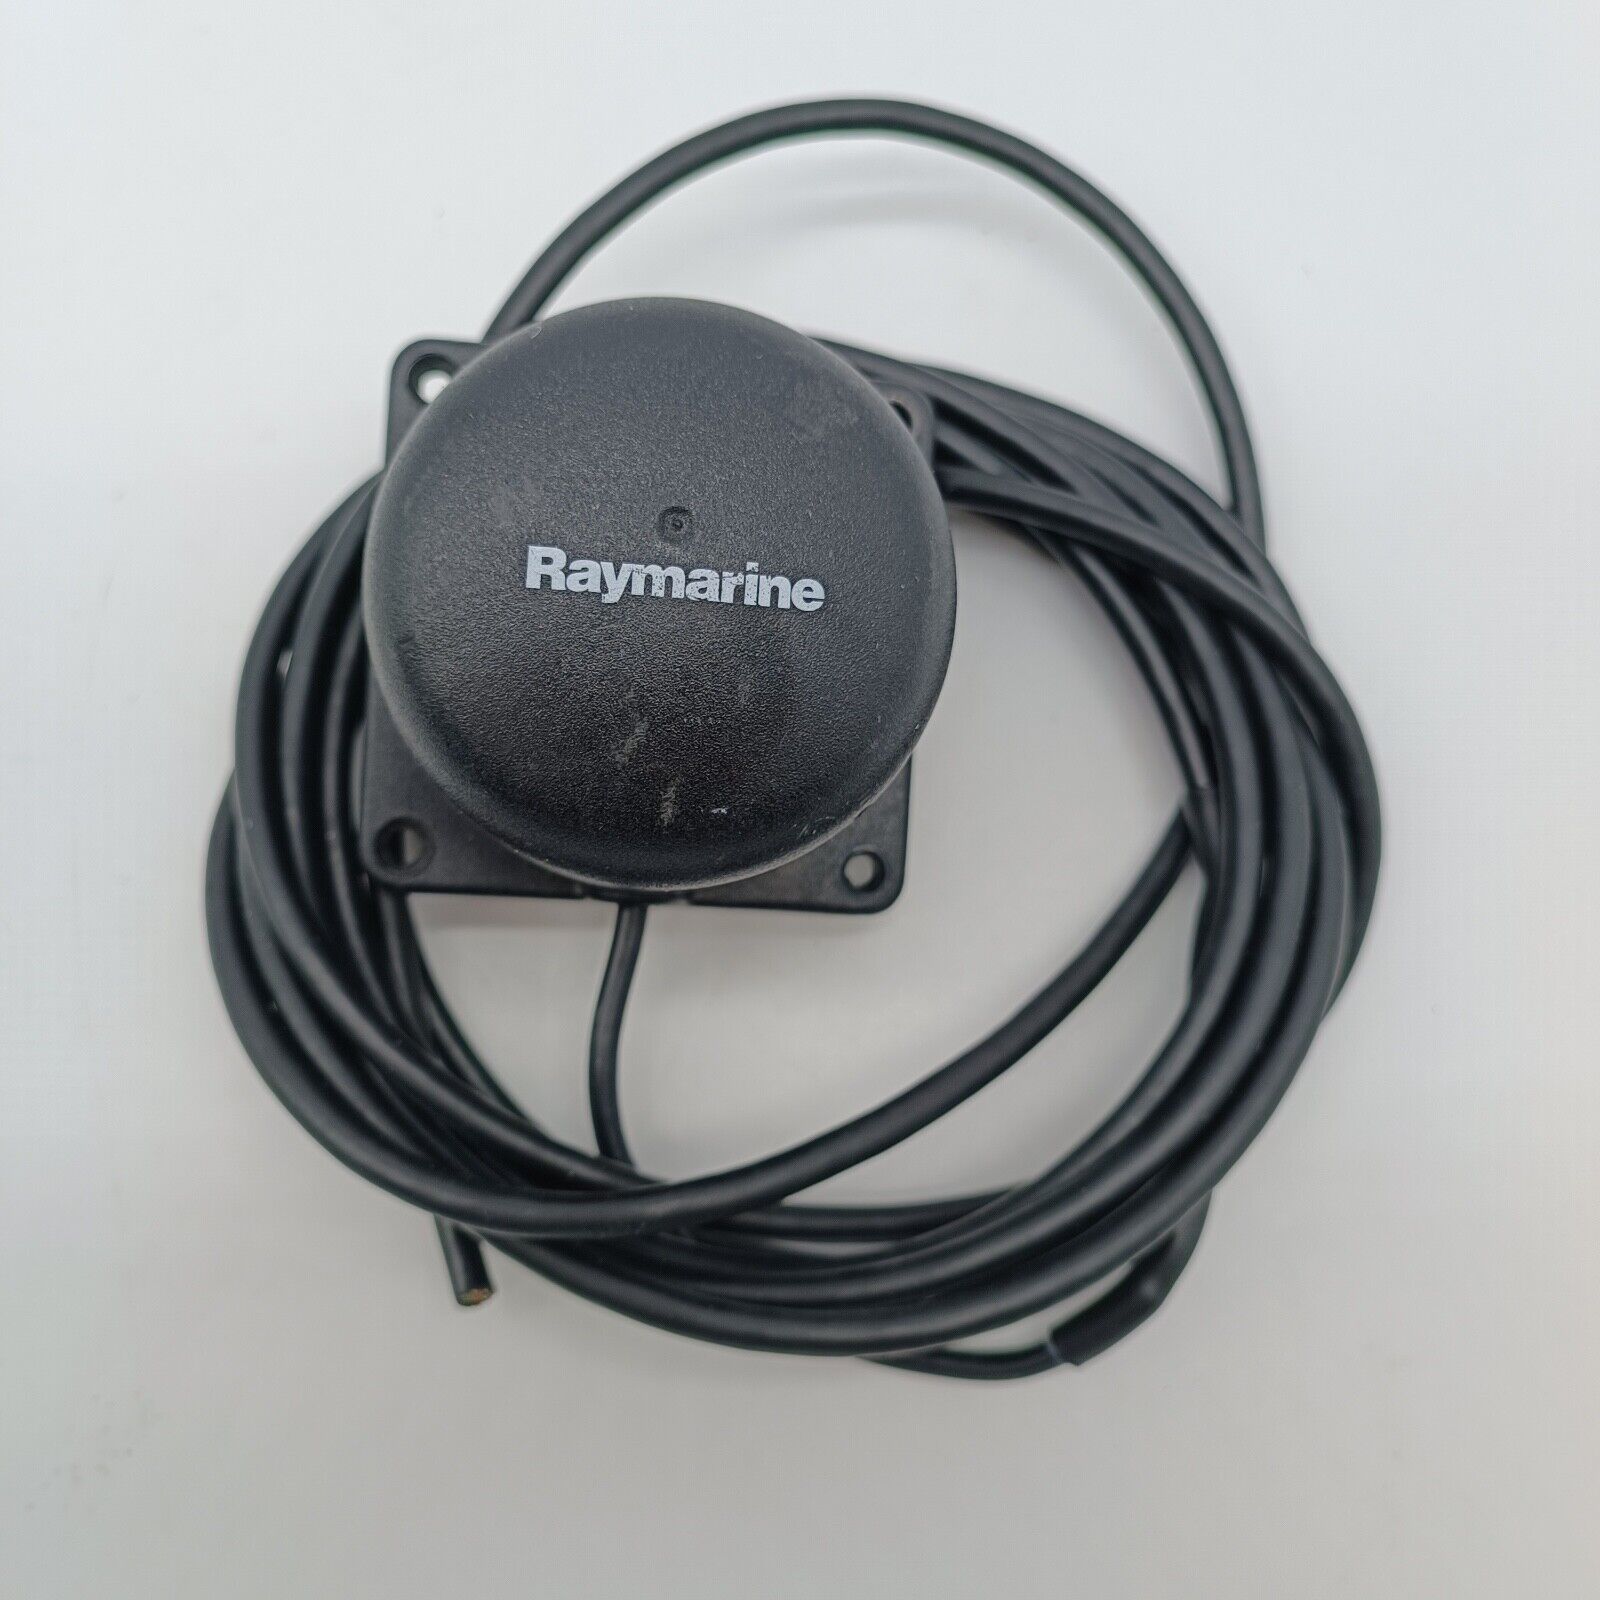 Raytheon Raymarine Autohelm Fluxgate Compass Module M81190 f/ Marine Autopilot